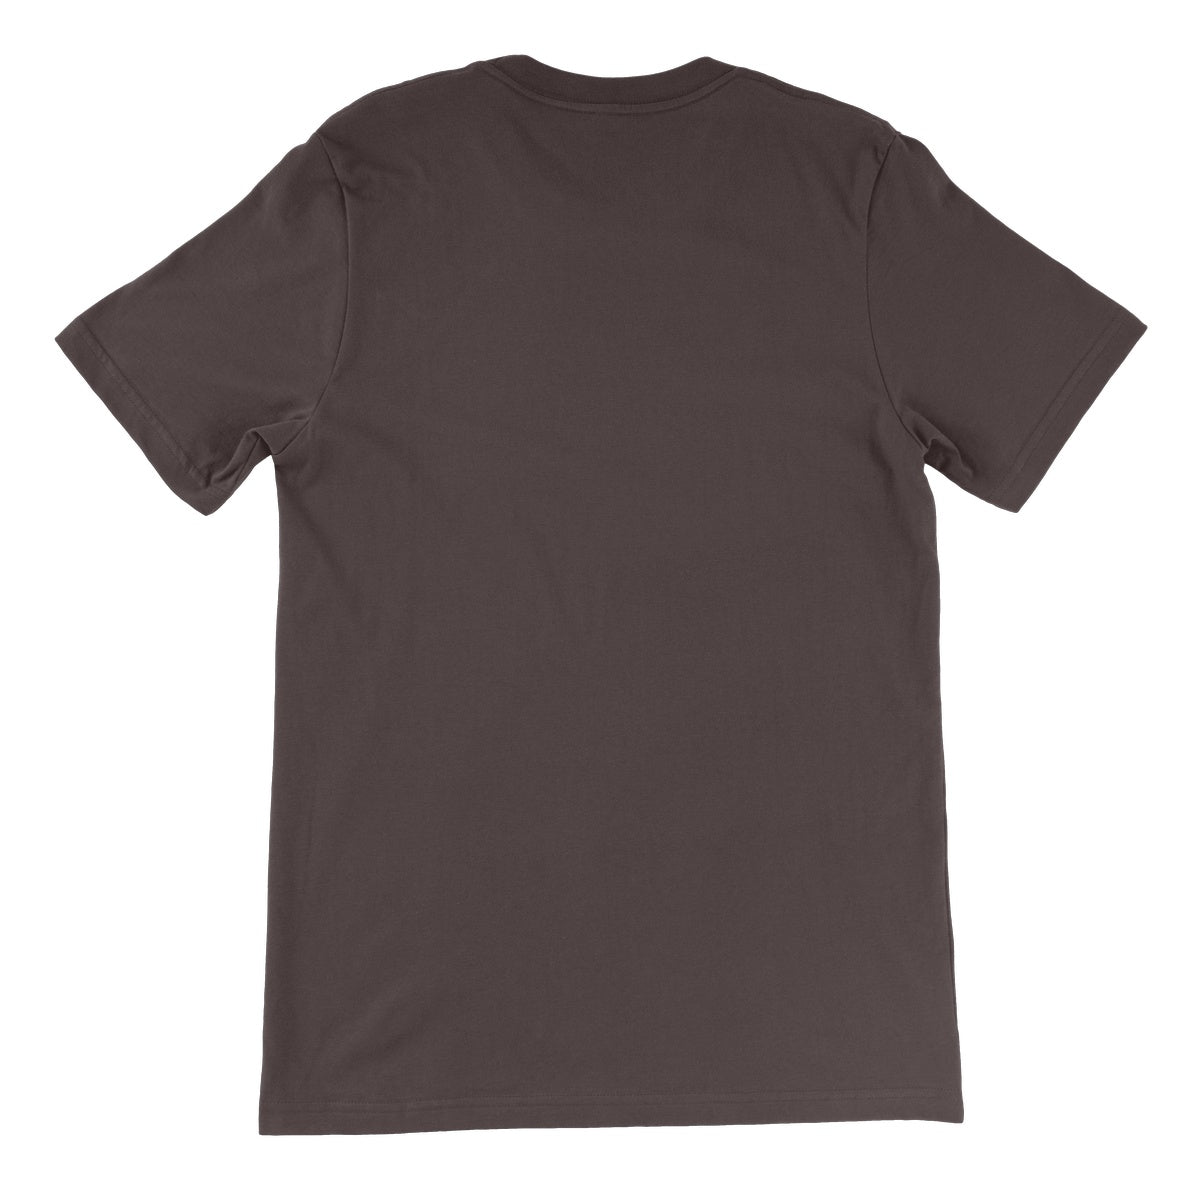 Shaun of the Dead Illustrated Unisex Short Sleeve T-Shirt